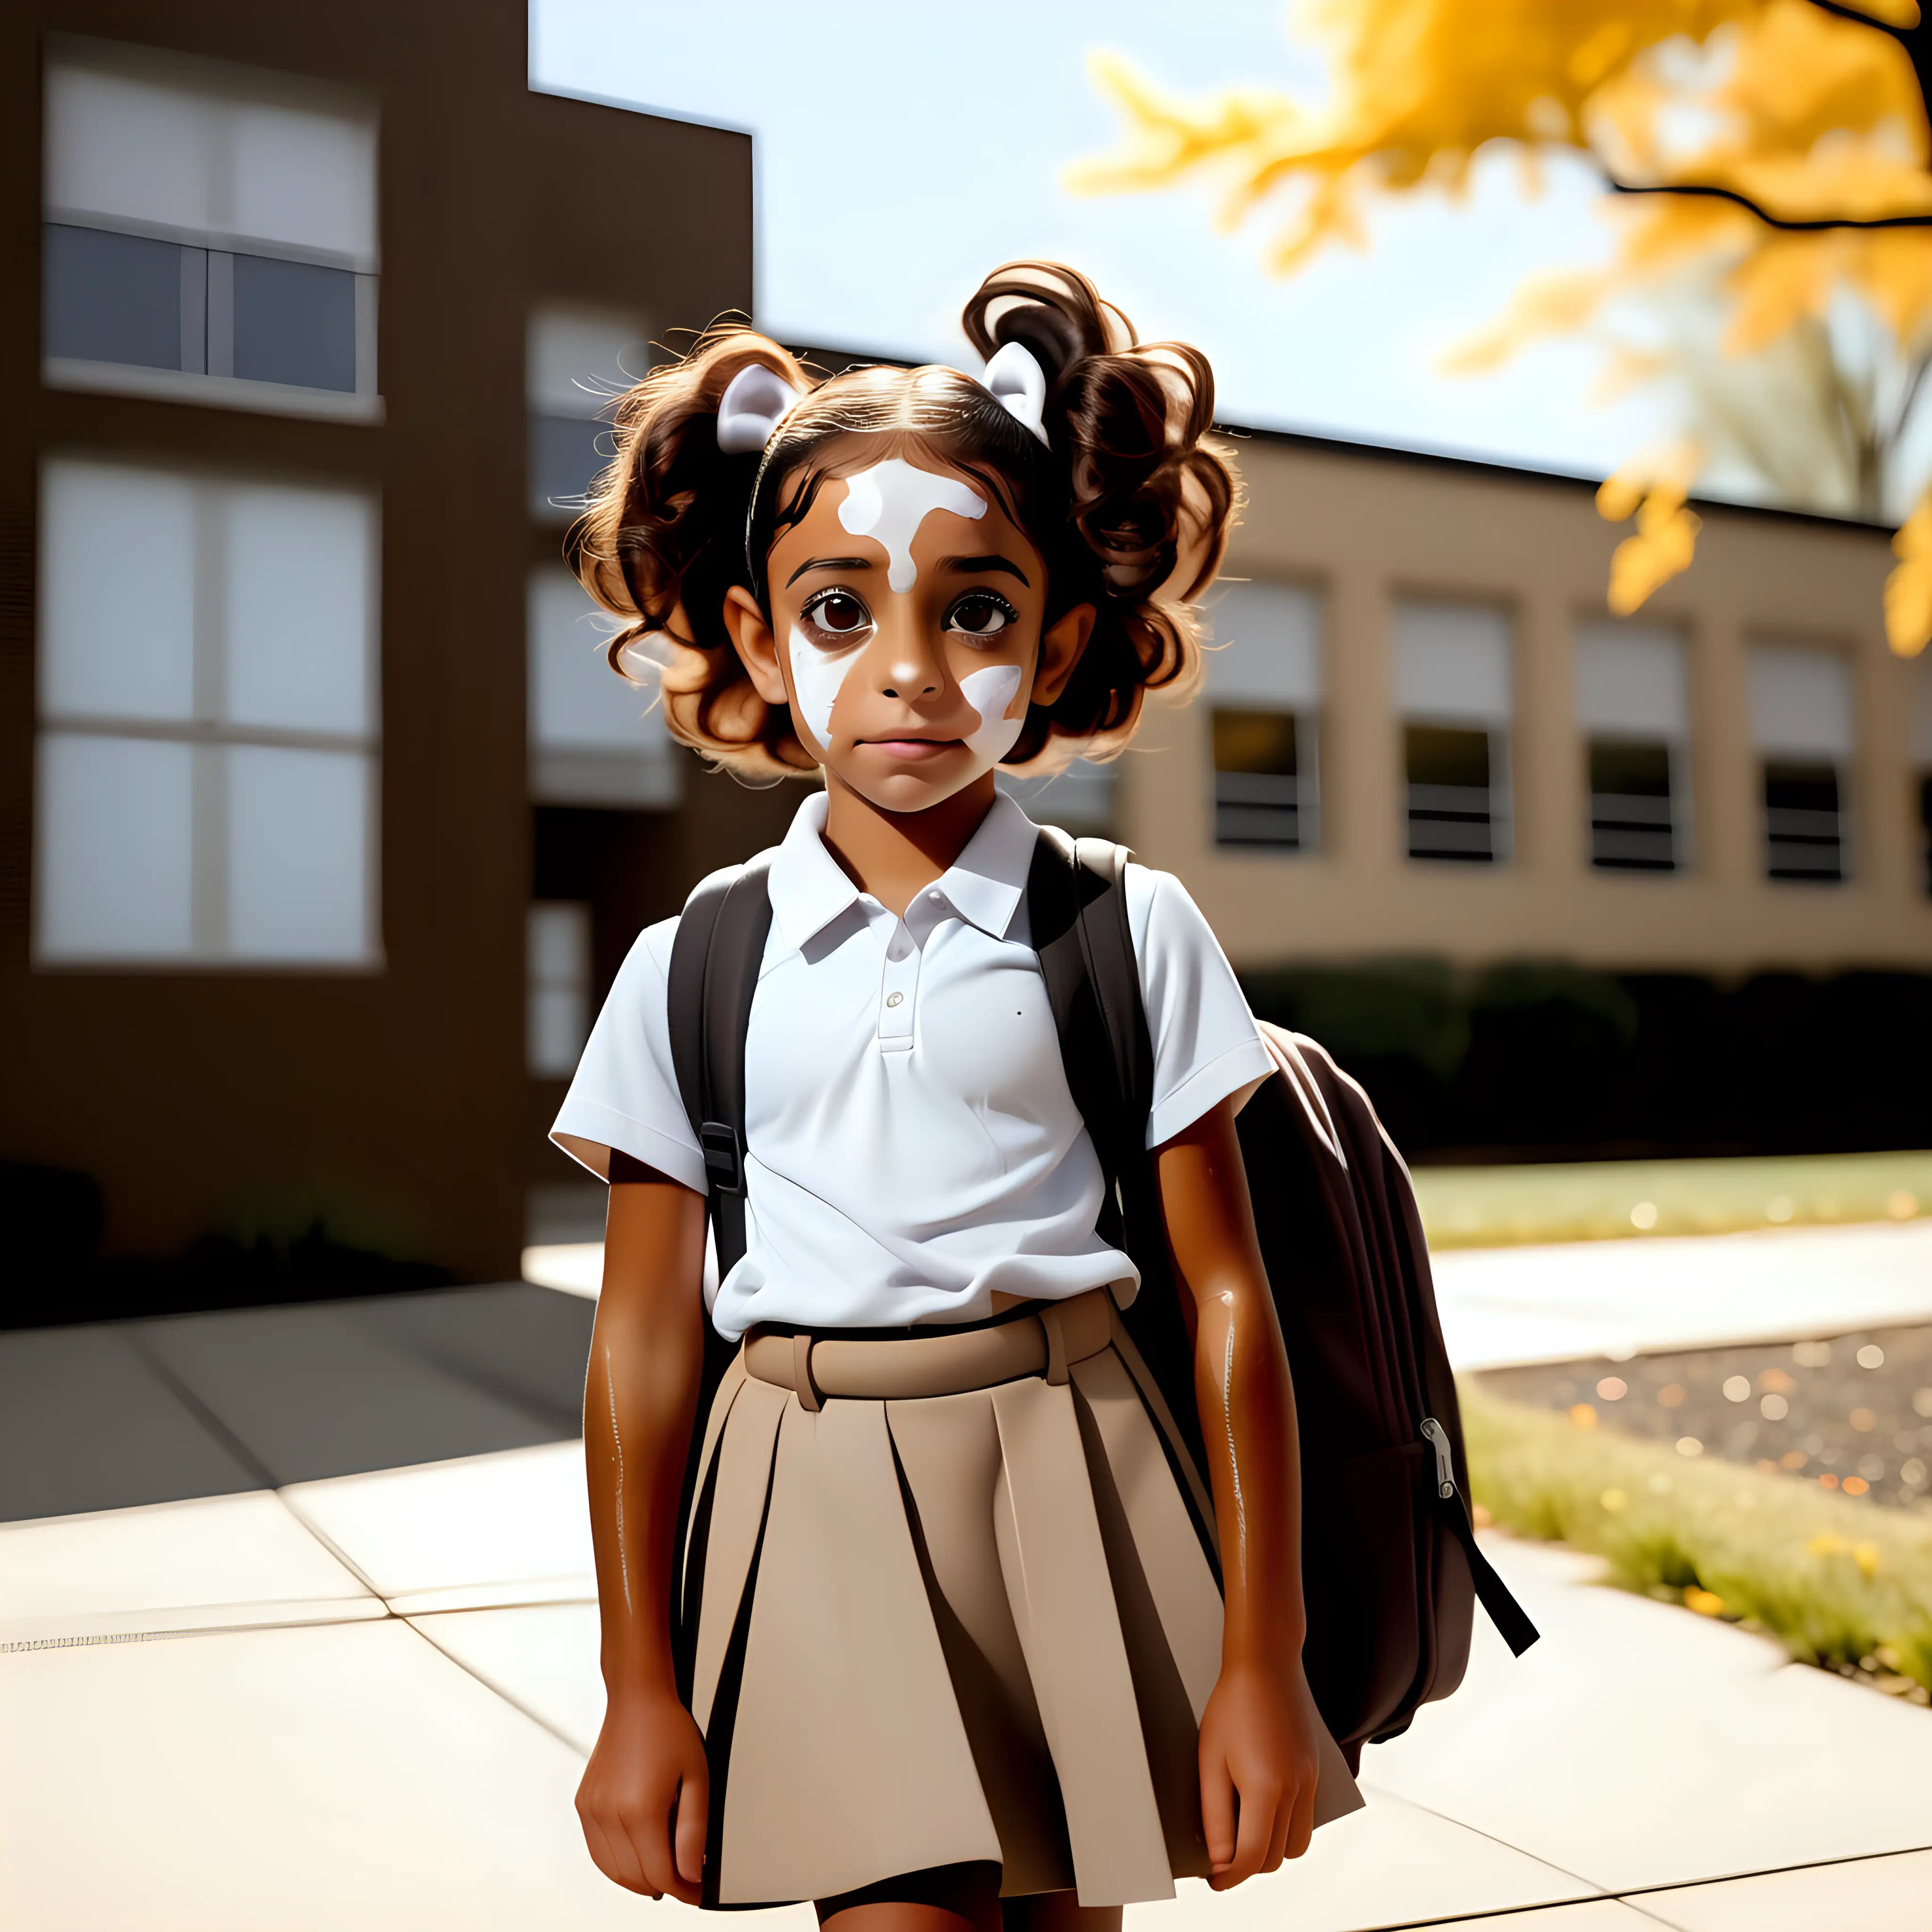 Confident Little Girl with Vitiligo Heading to School